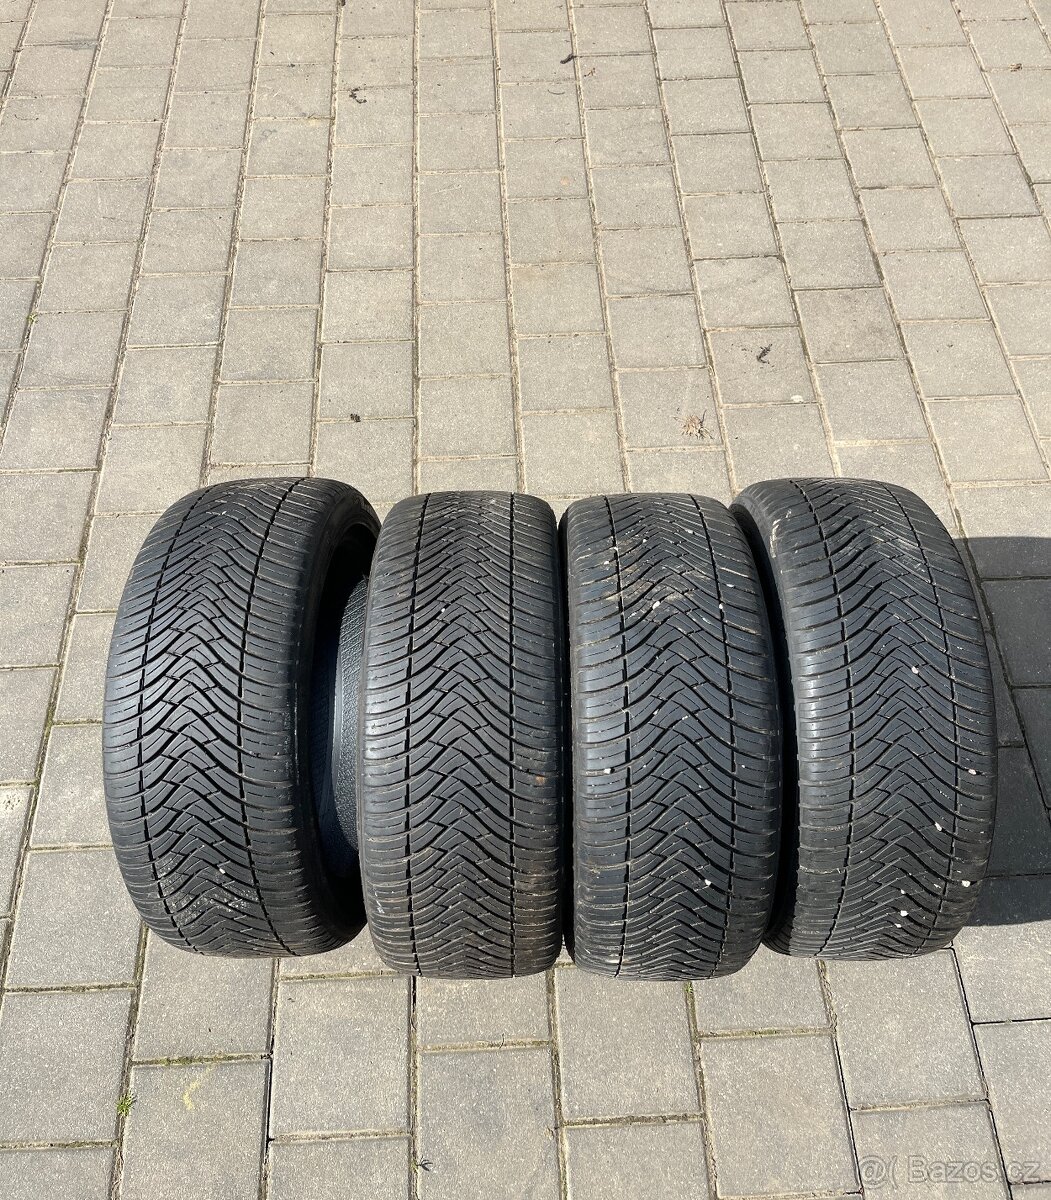 Celoroční pneu Triangle season X 225/45 r17